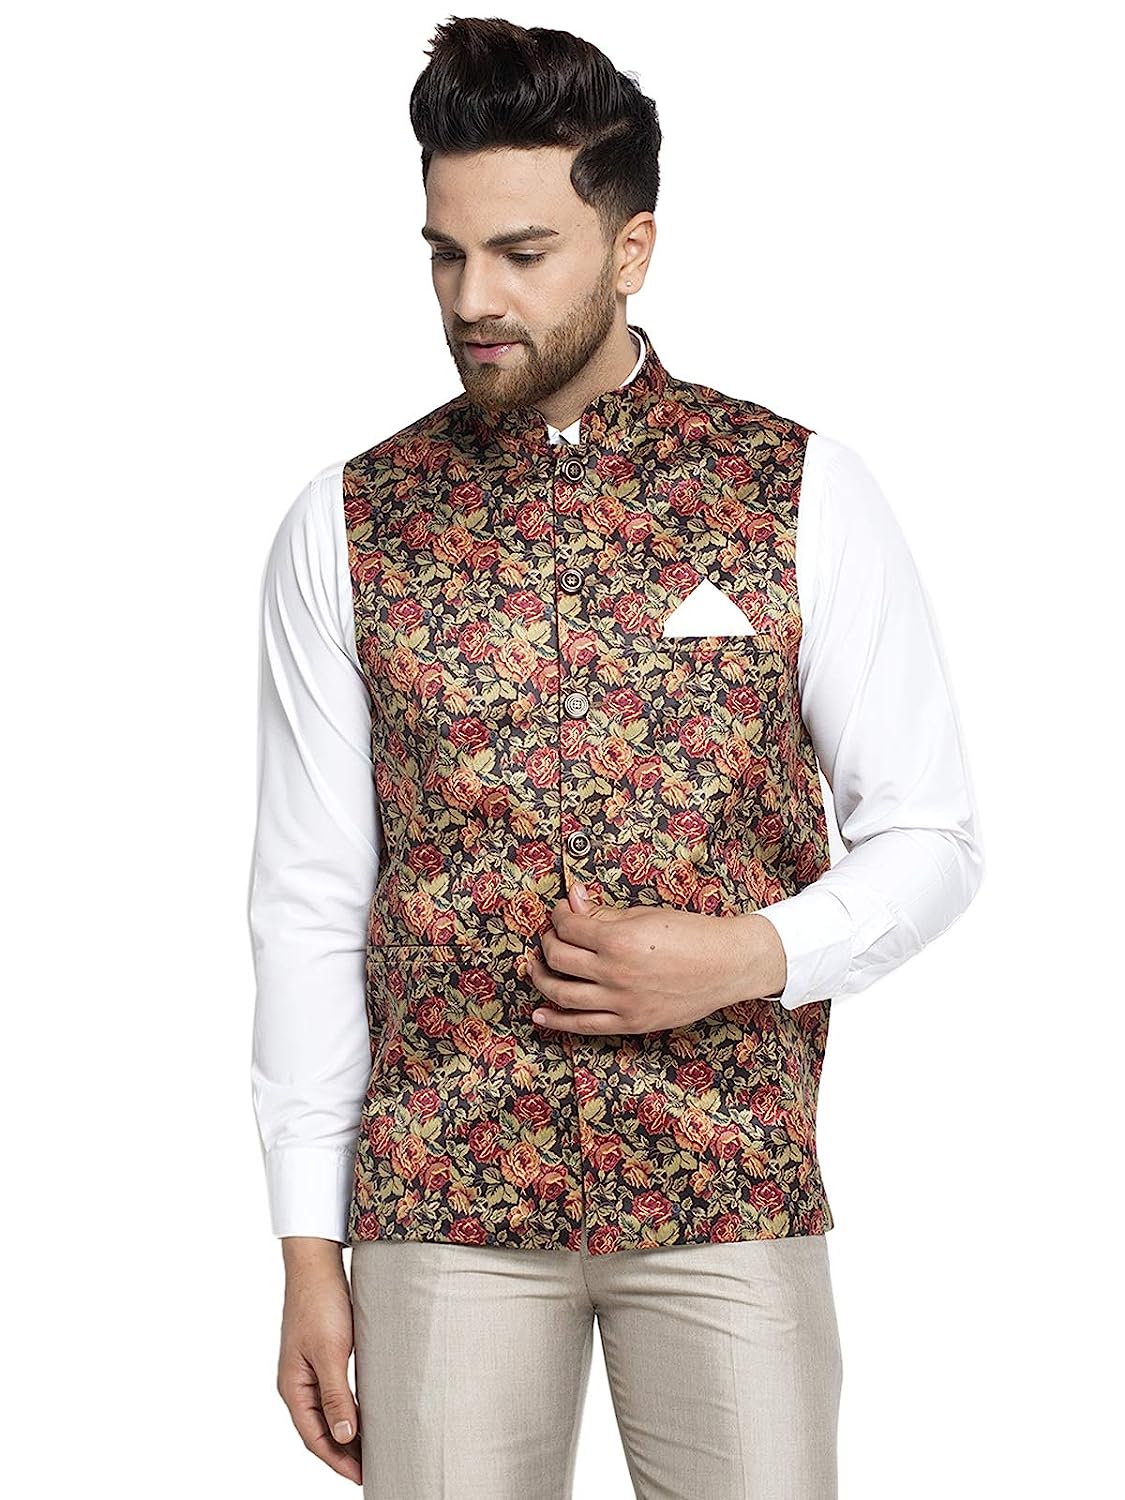 The Hundreds Hudson Floral Print Jacket Mens XL Poly Tapestry w Corduroy  Collar | eBay